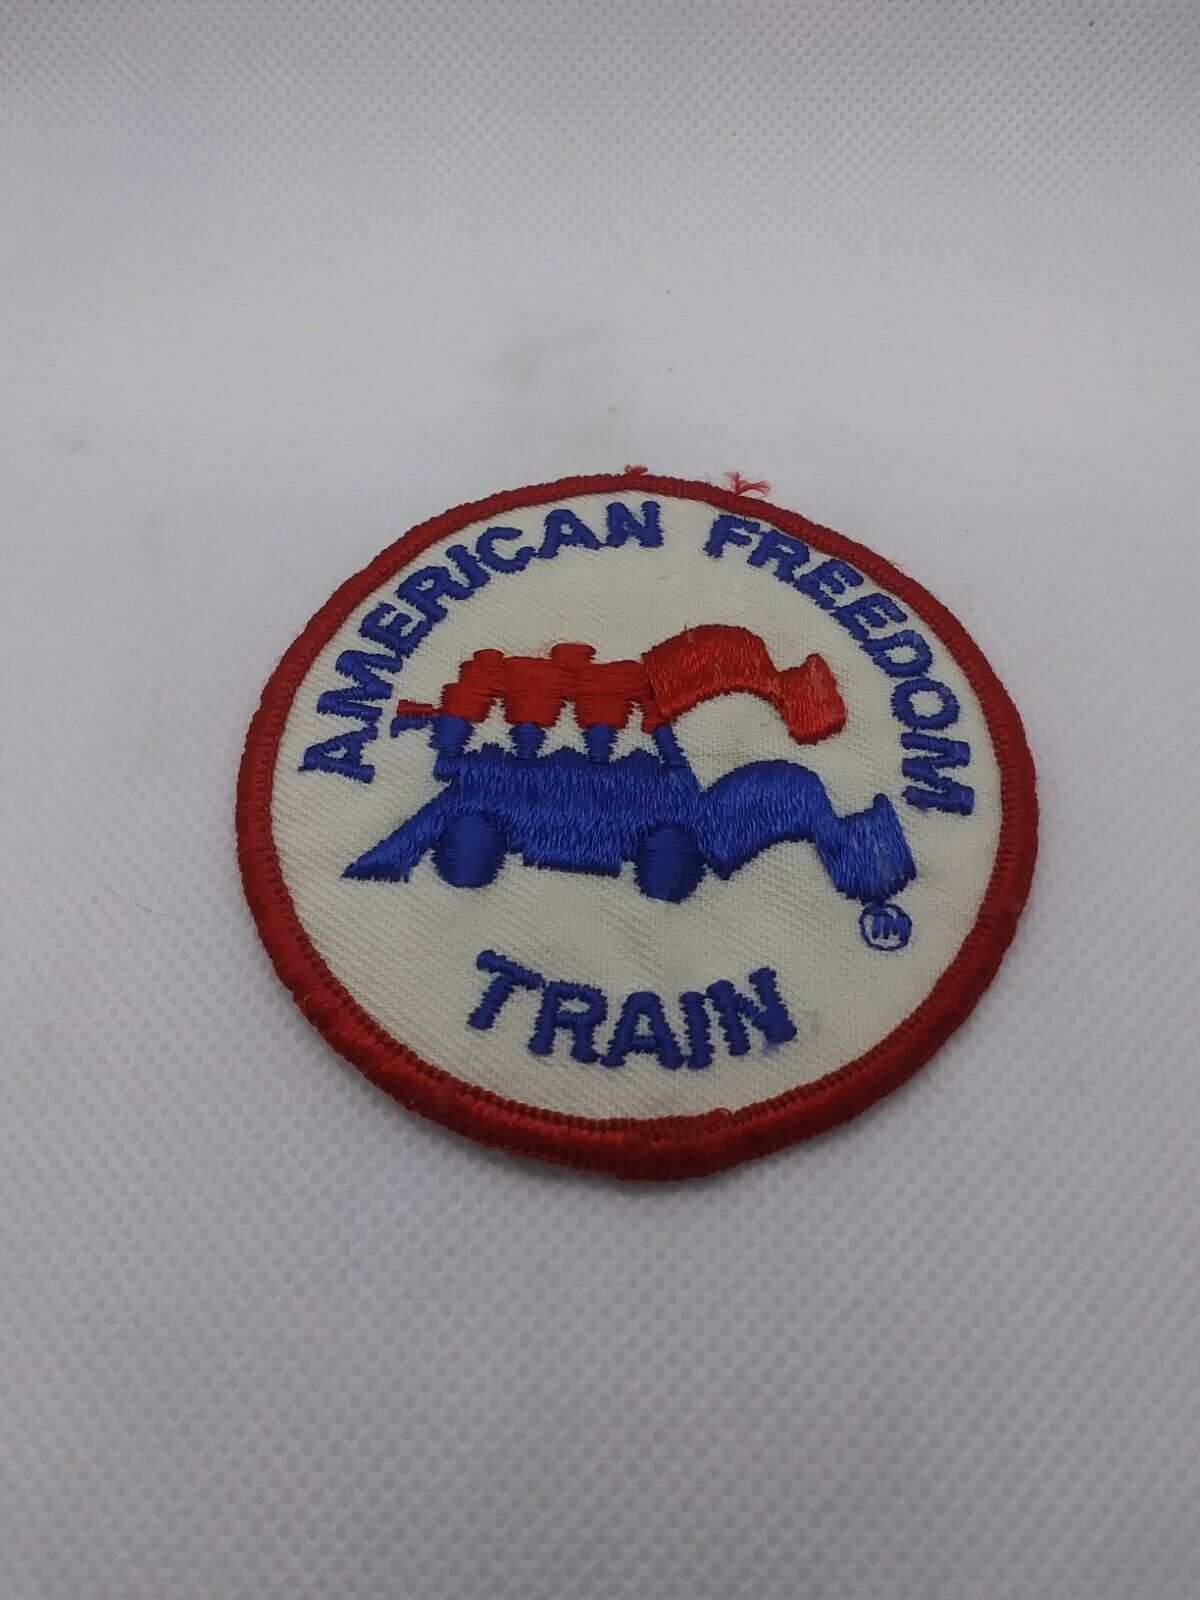 American Freedom Train Patch